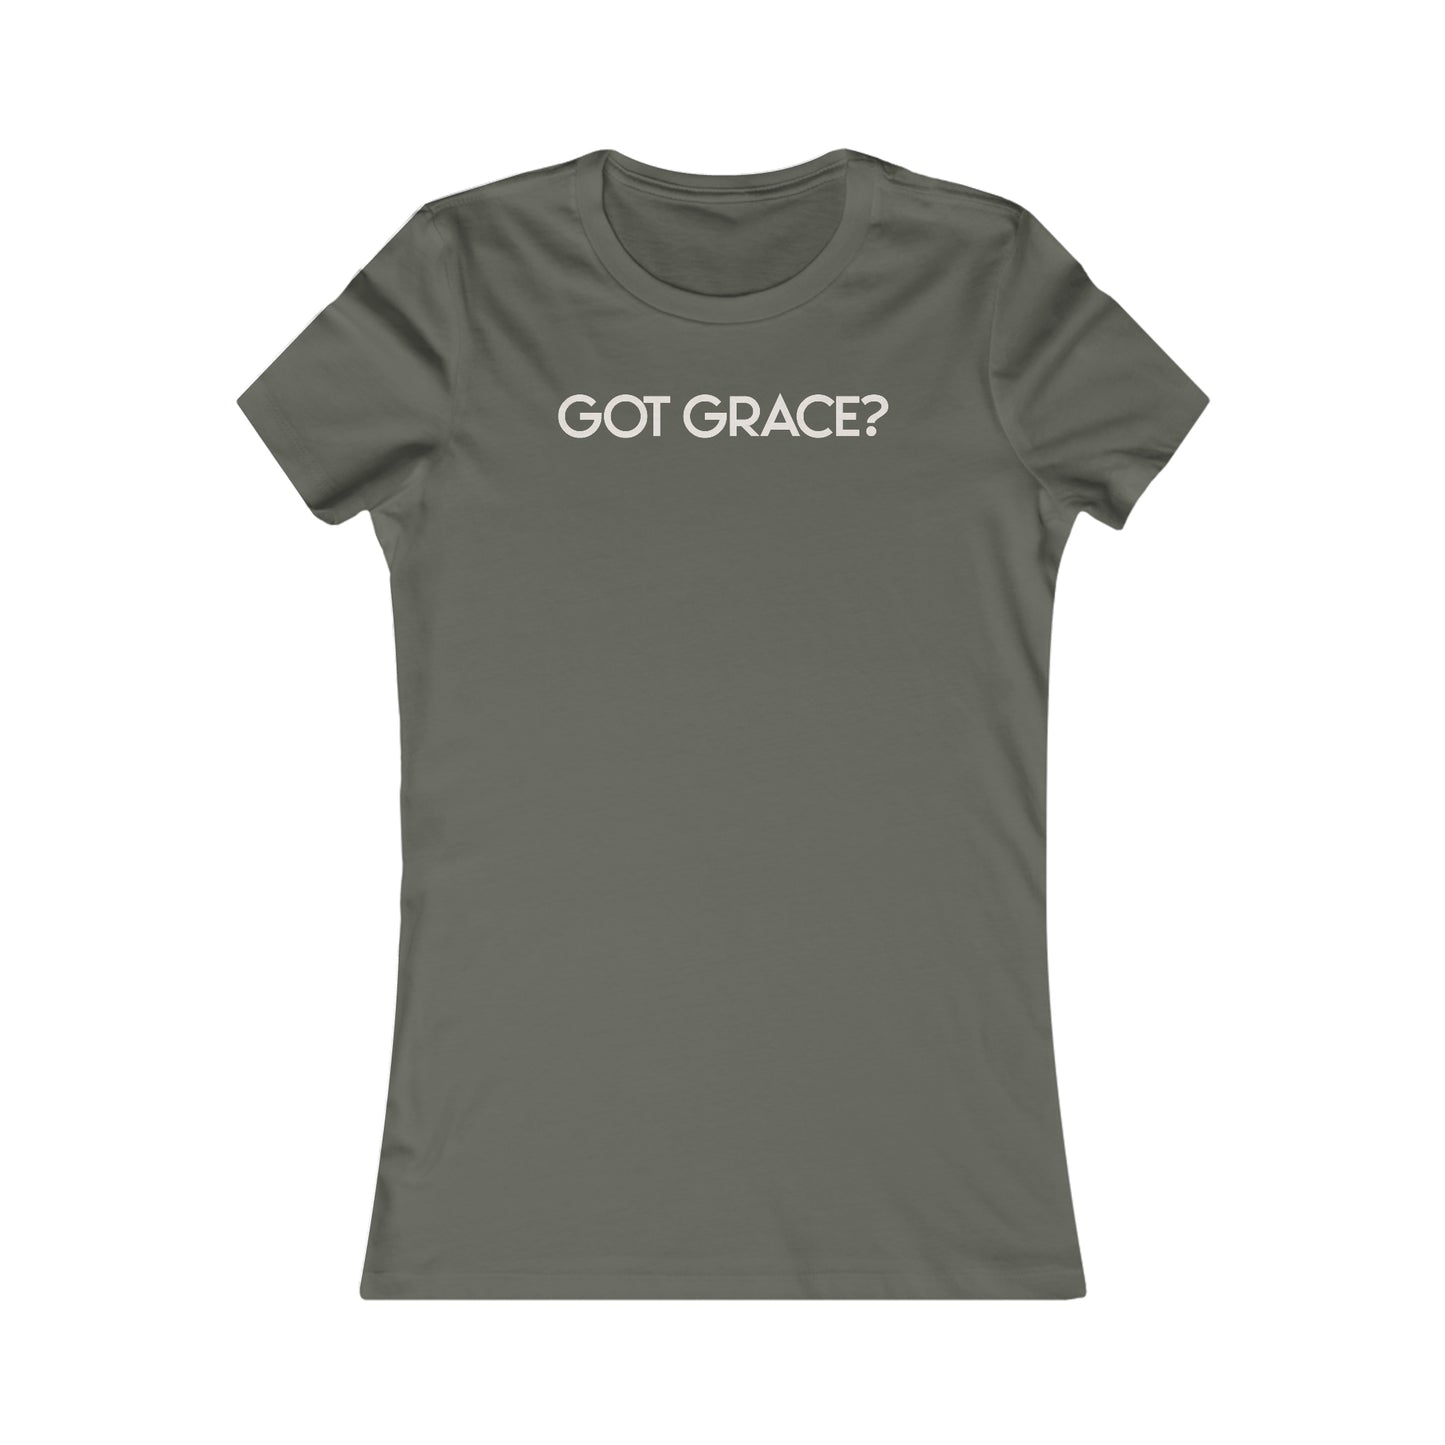 Got Grace?